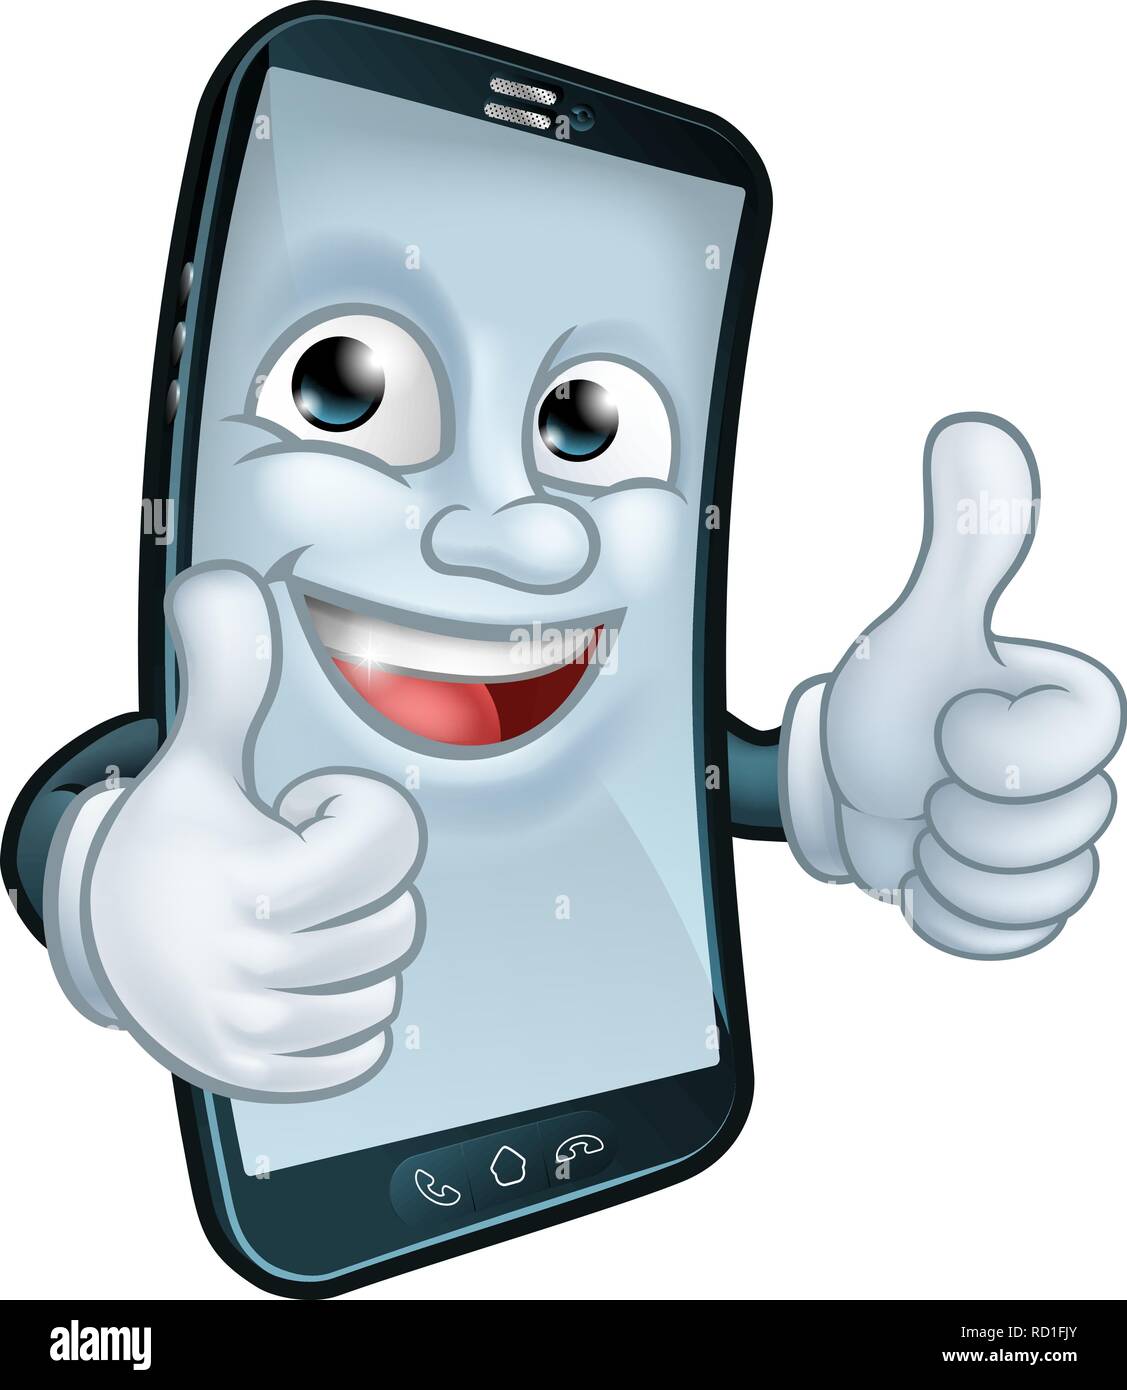 Mobile Phone Thumbs Up Cartoon Mascot Stock Vector